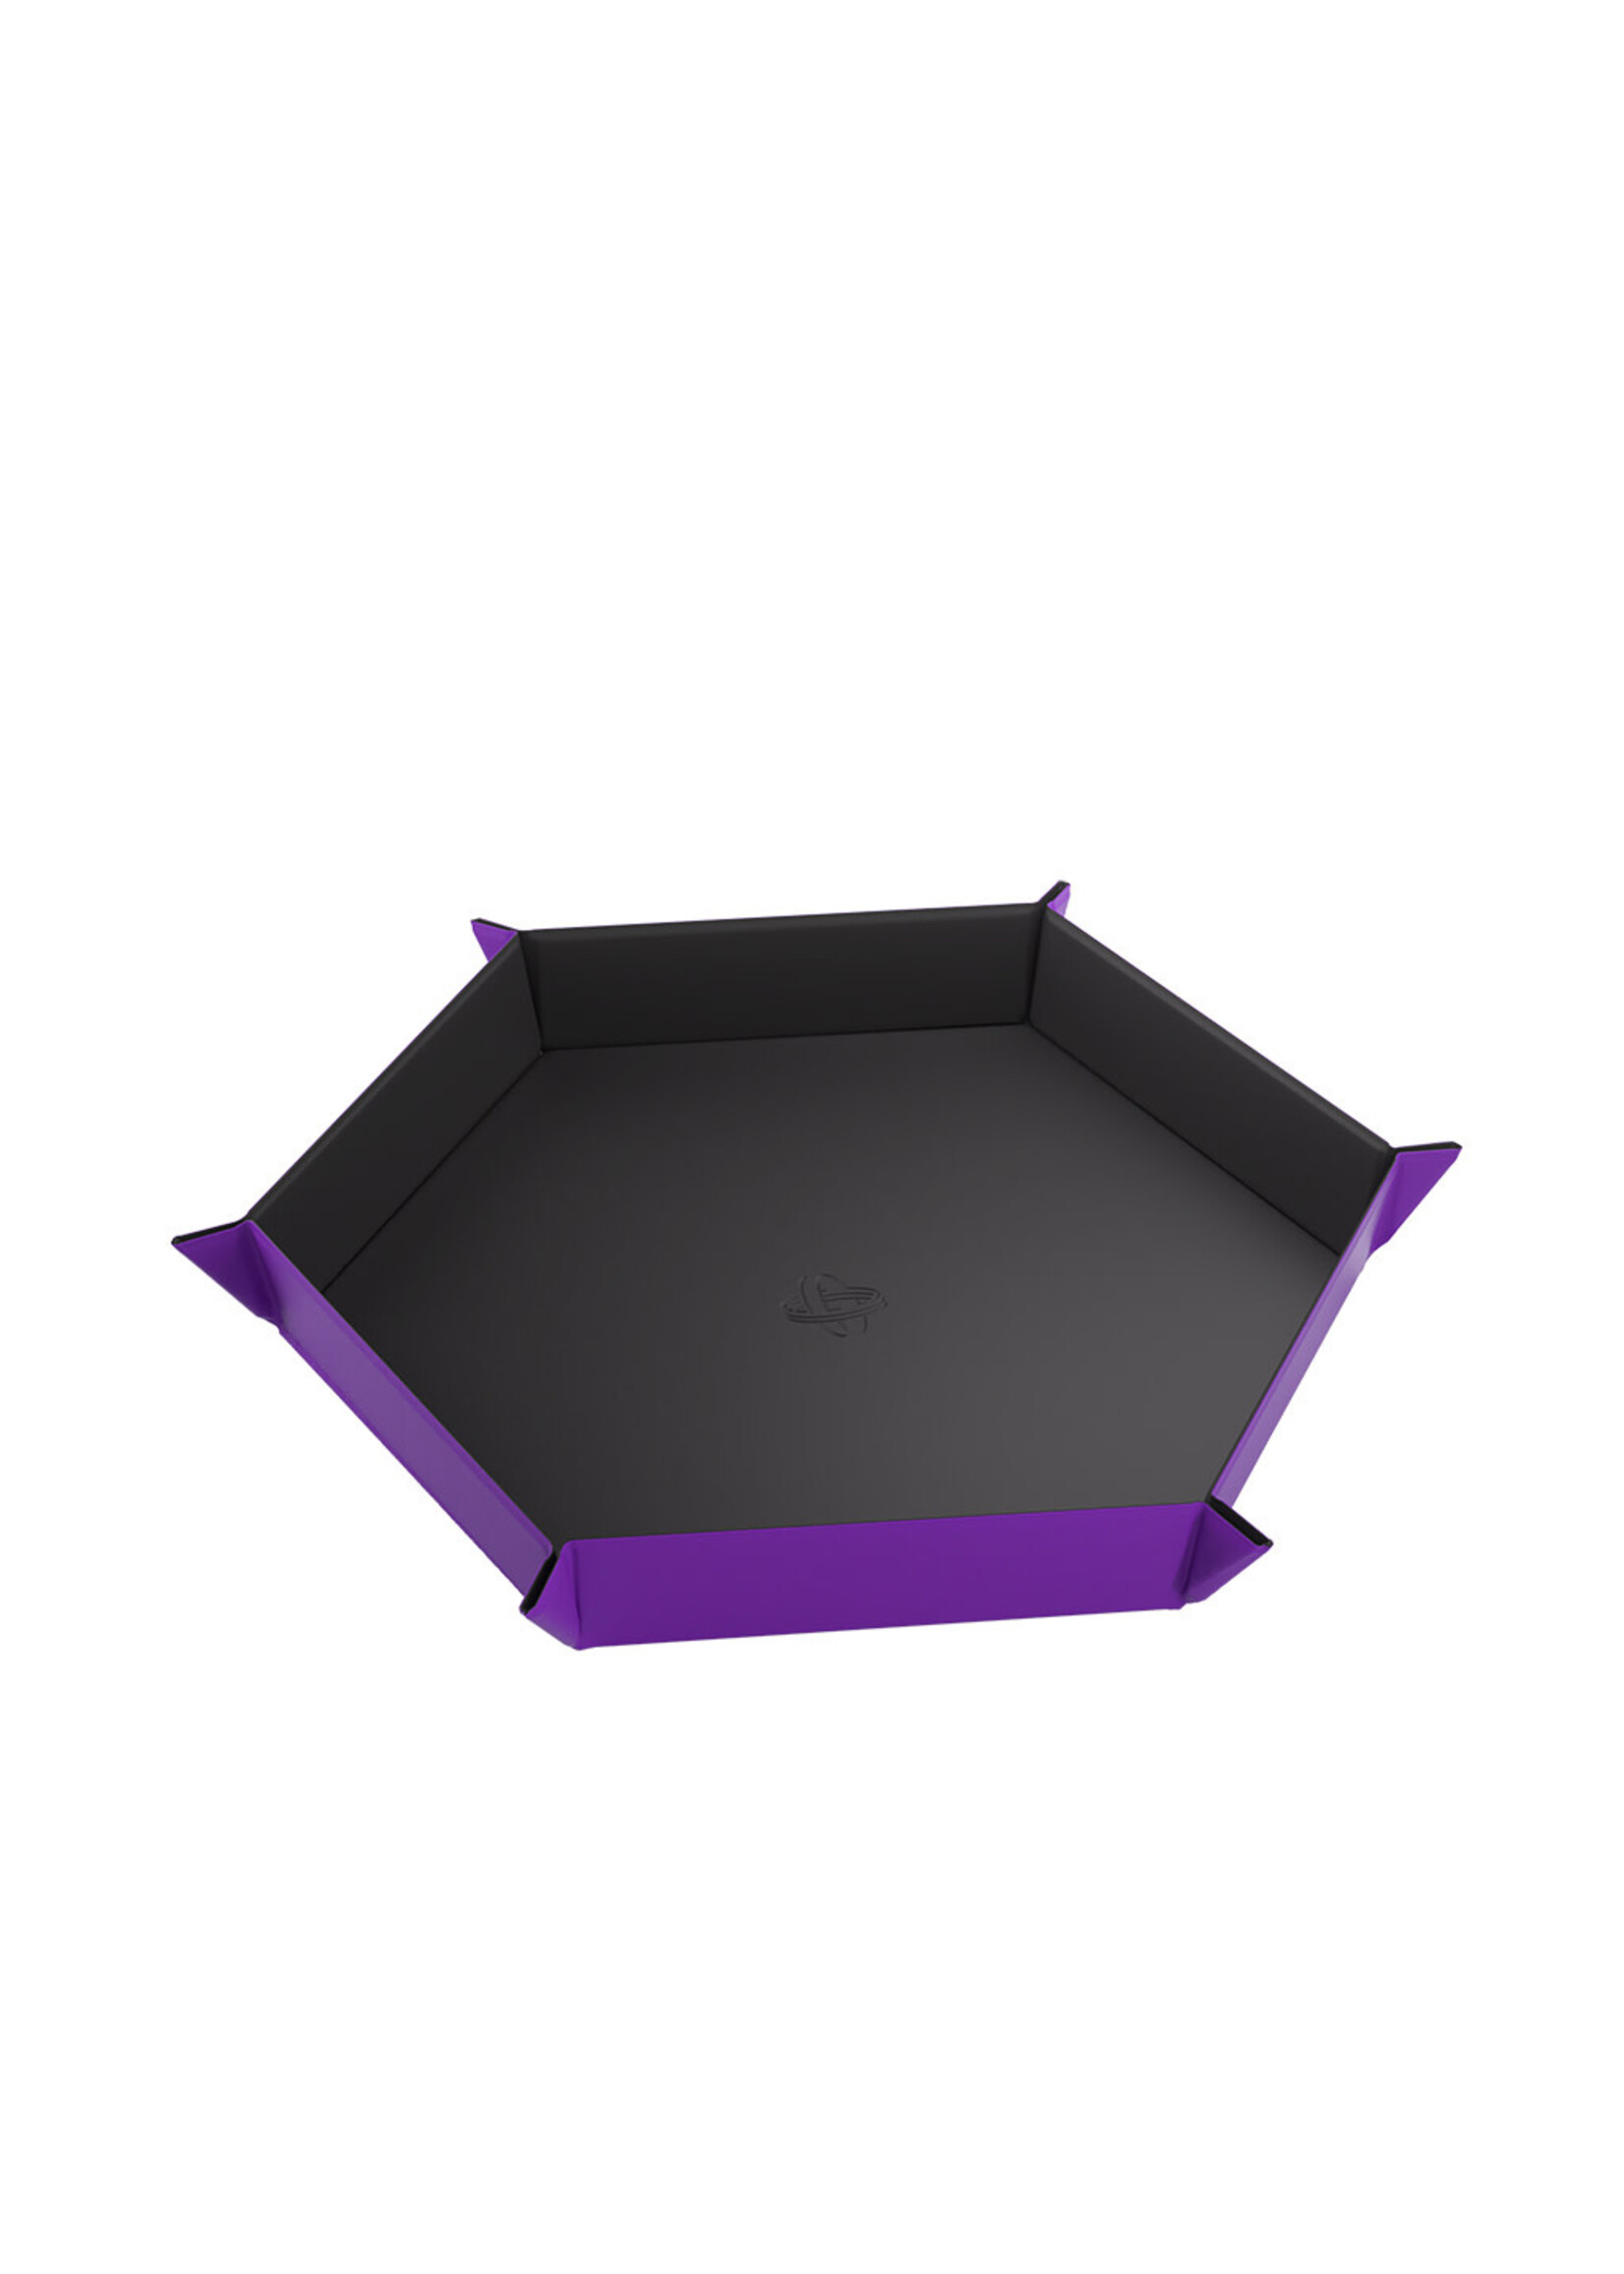 Gamegenic Magnetic Dice Tray Large Hexagonal Black w/ Purple